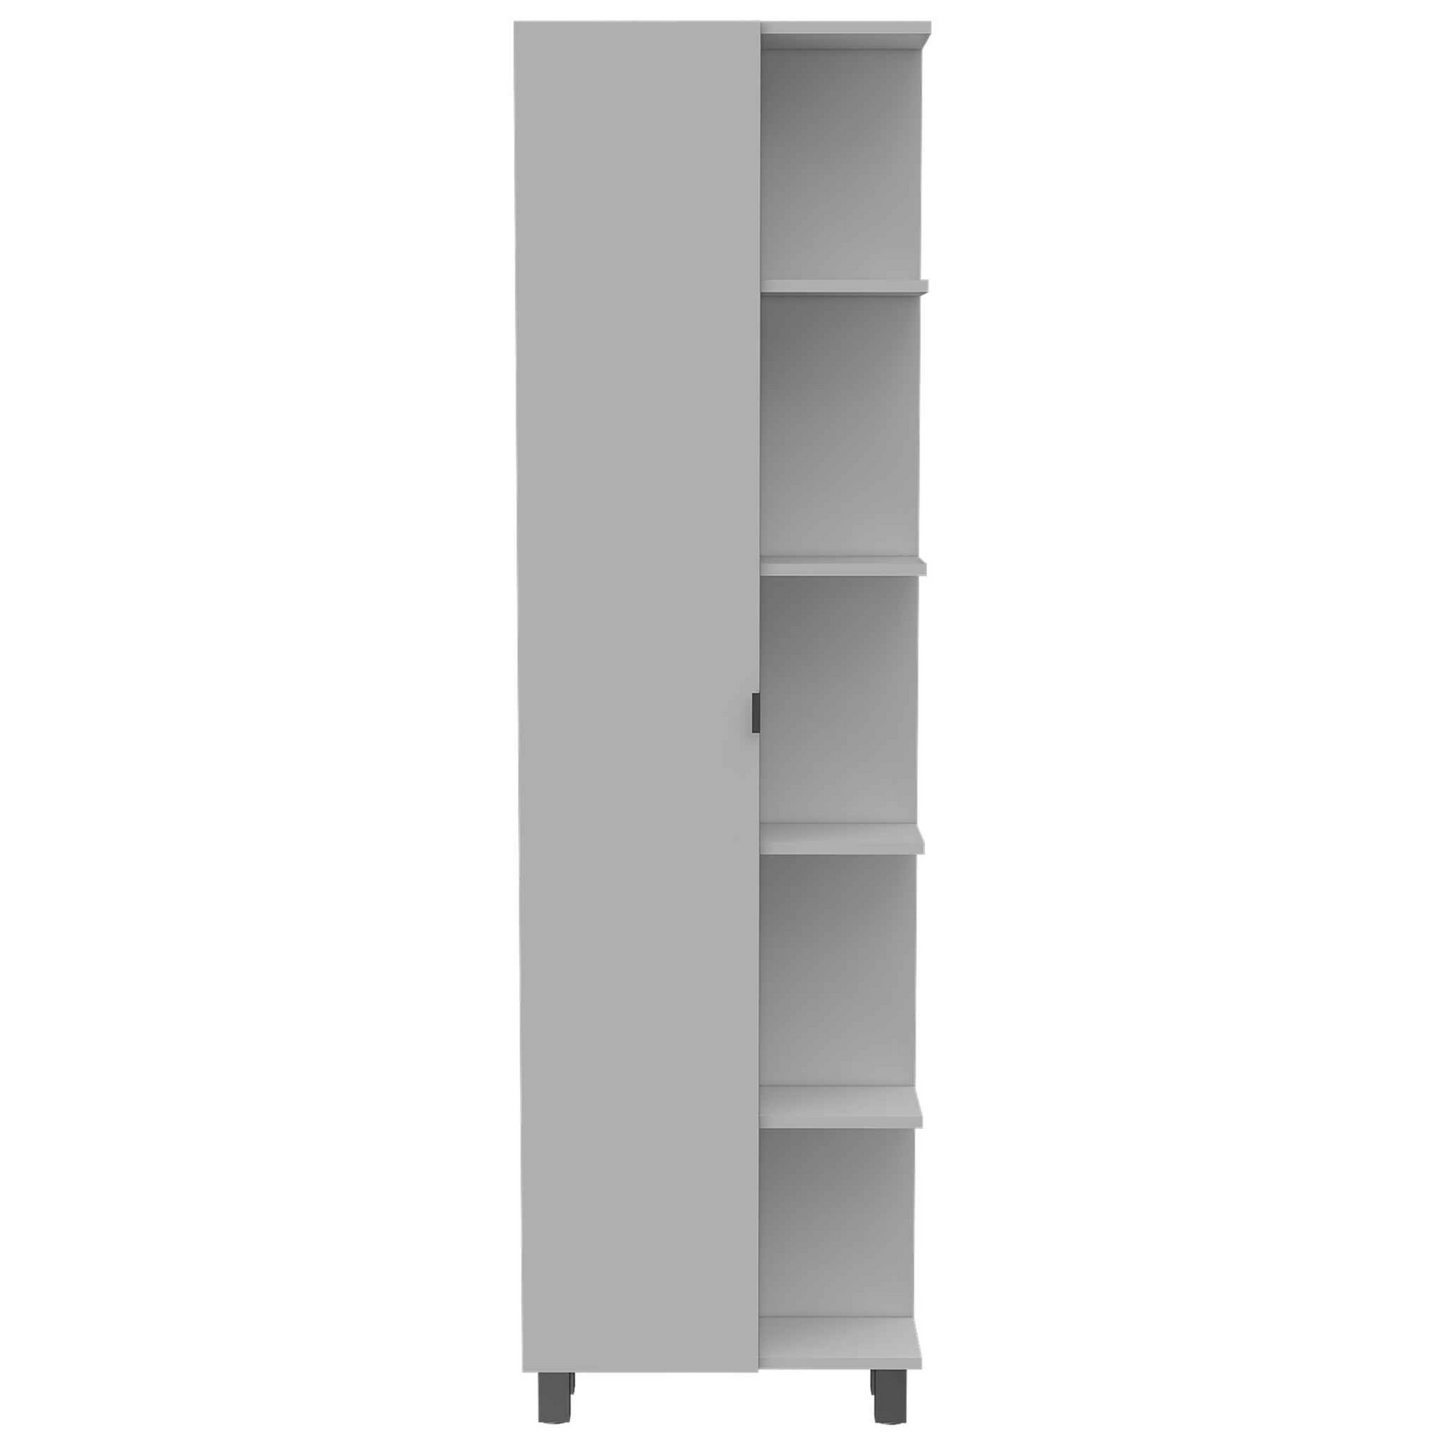 Venus Corner Linen Single Door Cabinet, Five External Shelves, Four Interior Shelves